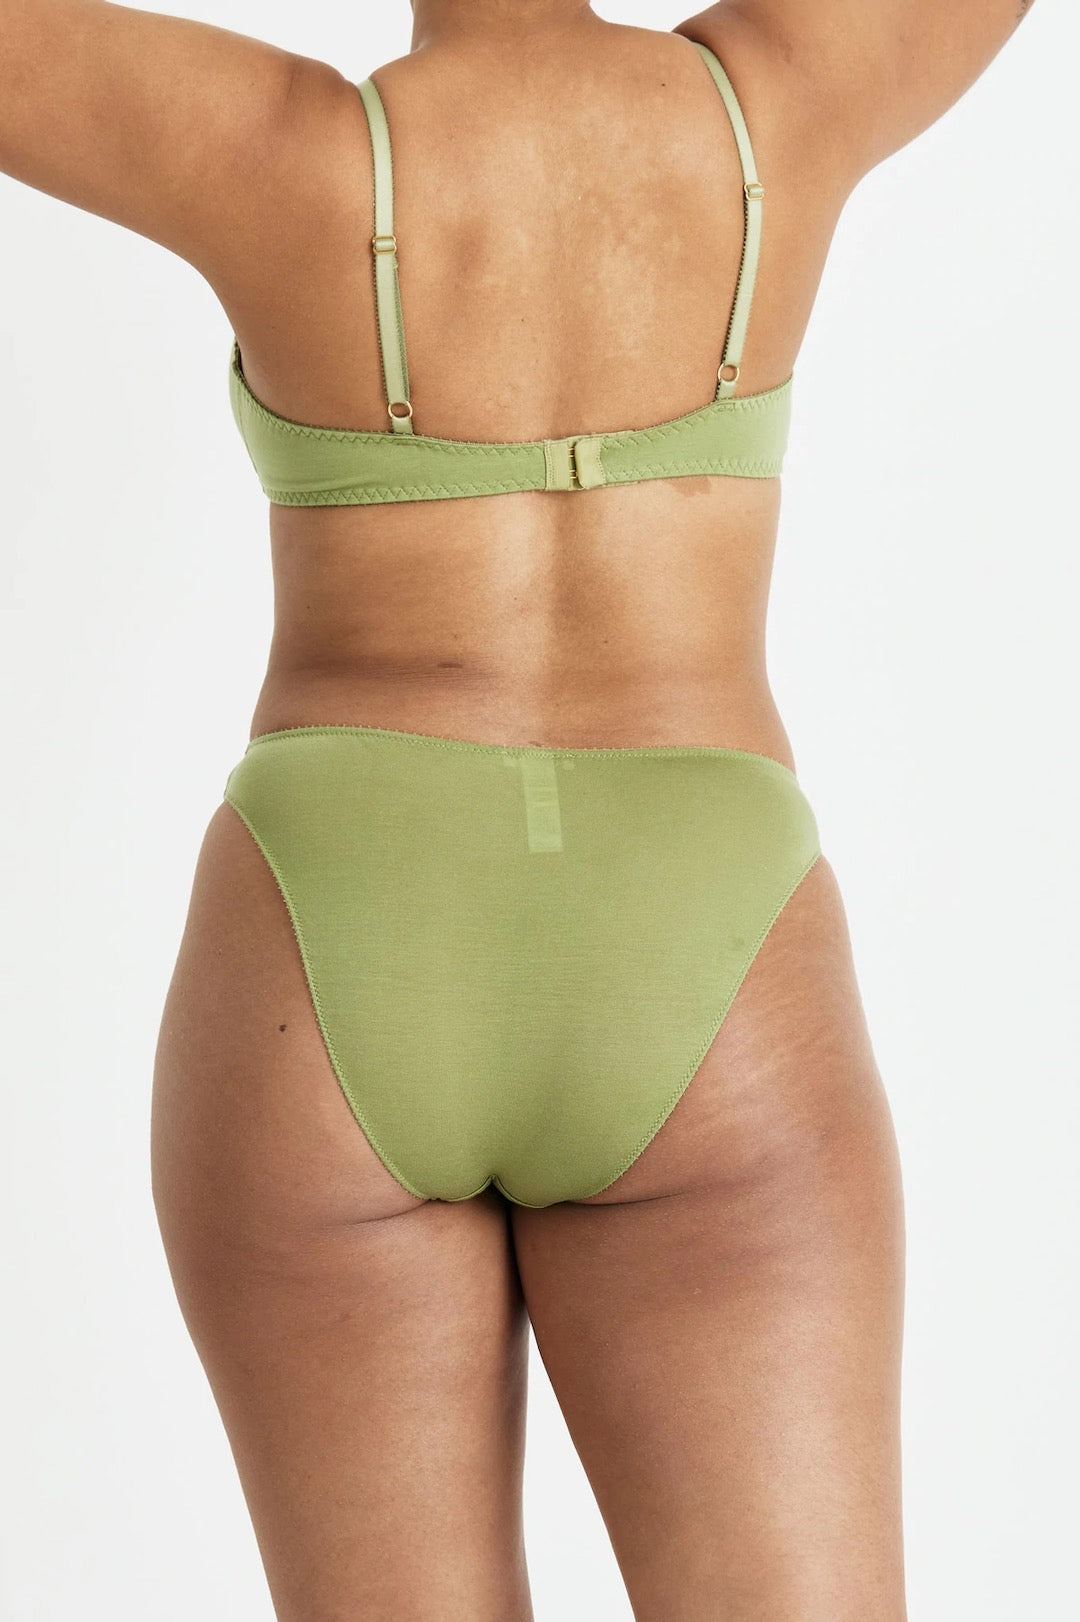 The back view of a woman wearing the Videris Angela Bra – Olive in a green bikini.